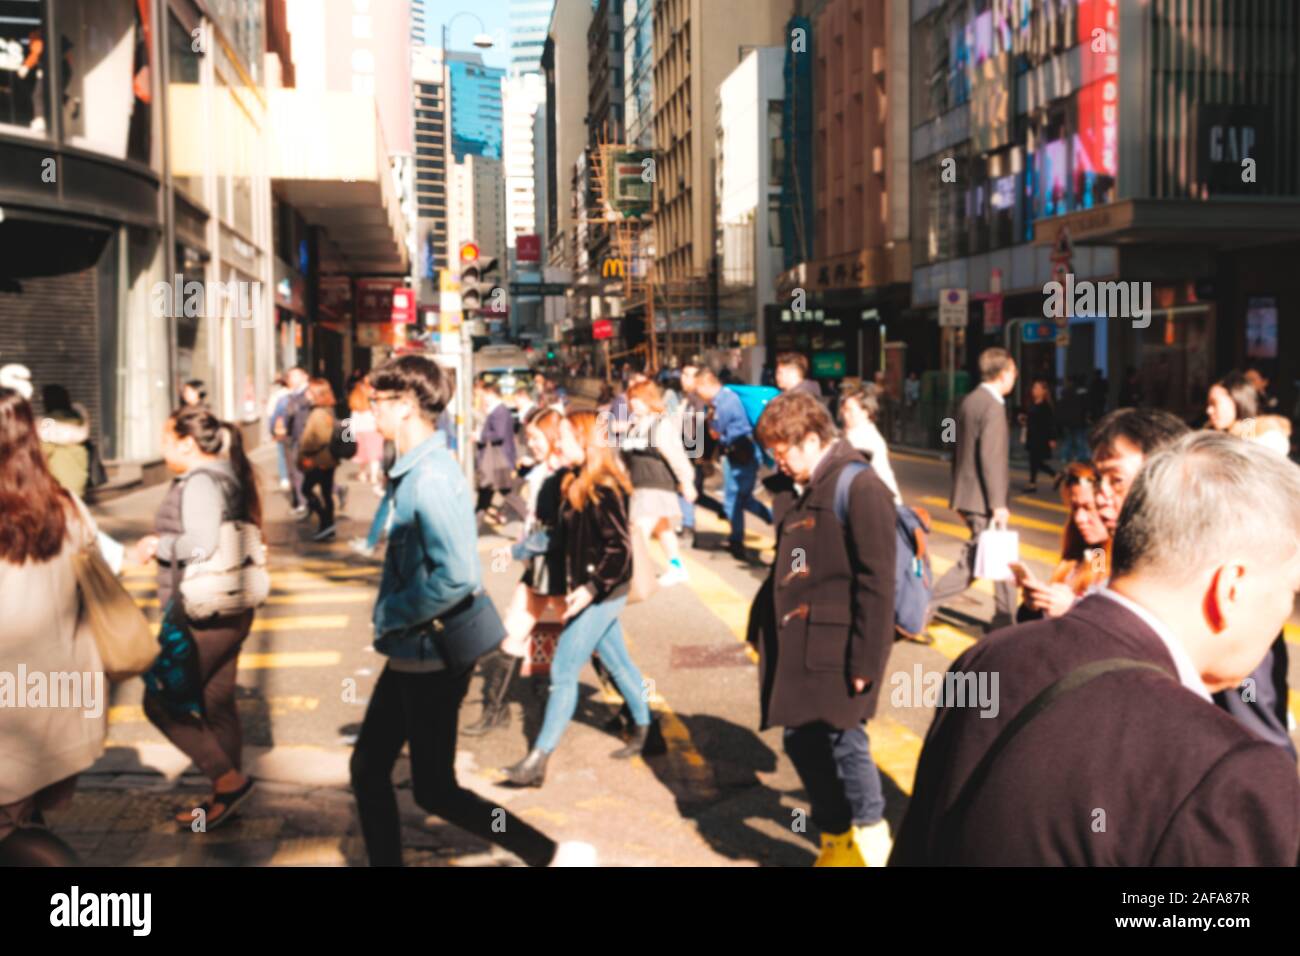 HongKong, China - November, 2019: Blurry image of unrecognizable people crossing street in Hong Kong Stock Photo